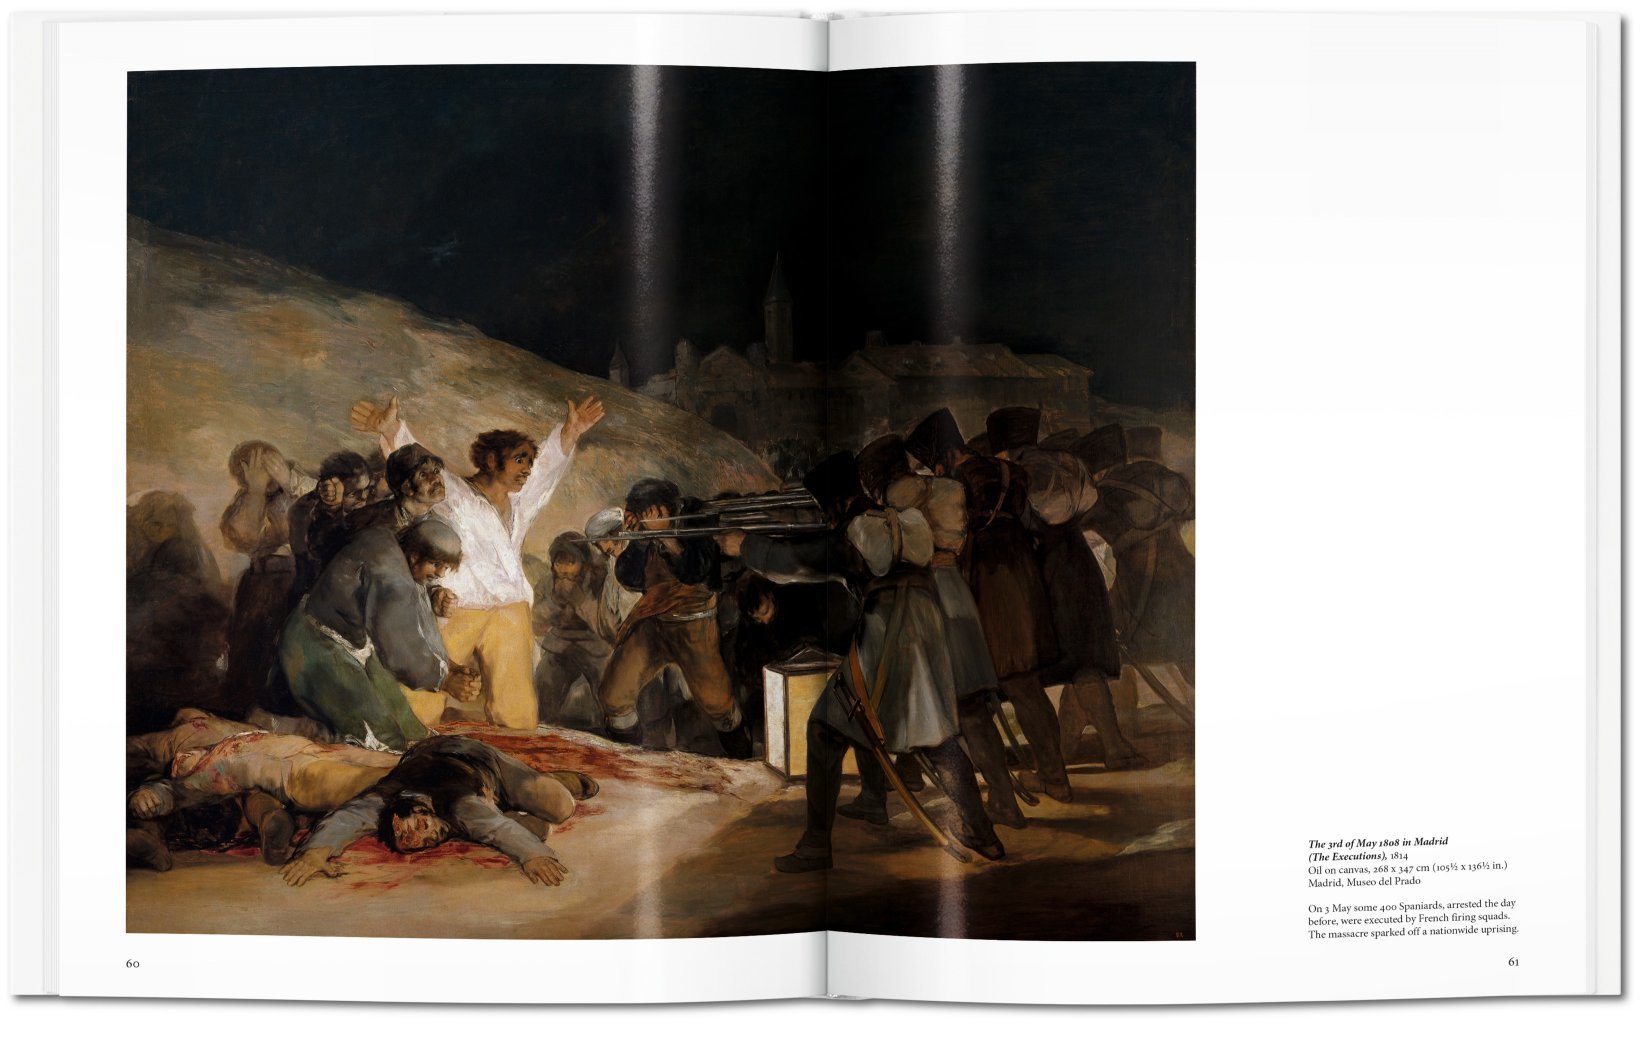 Goya - Basic Art Series